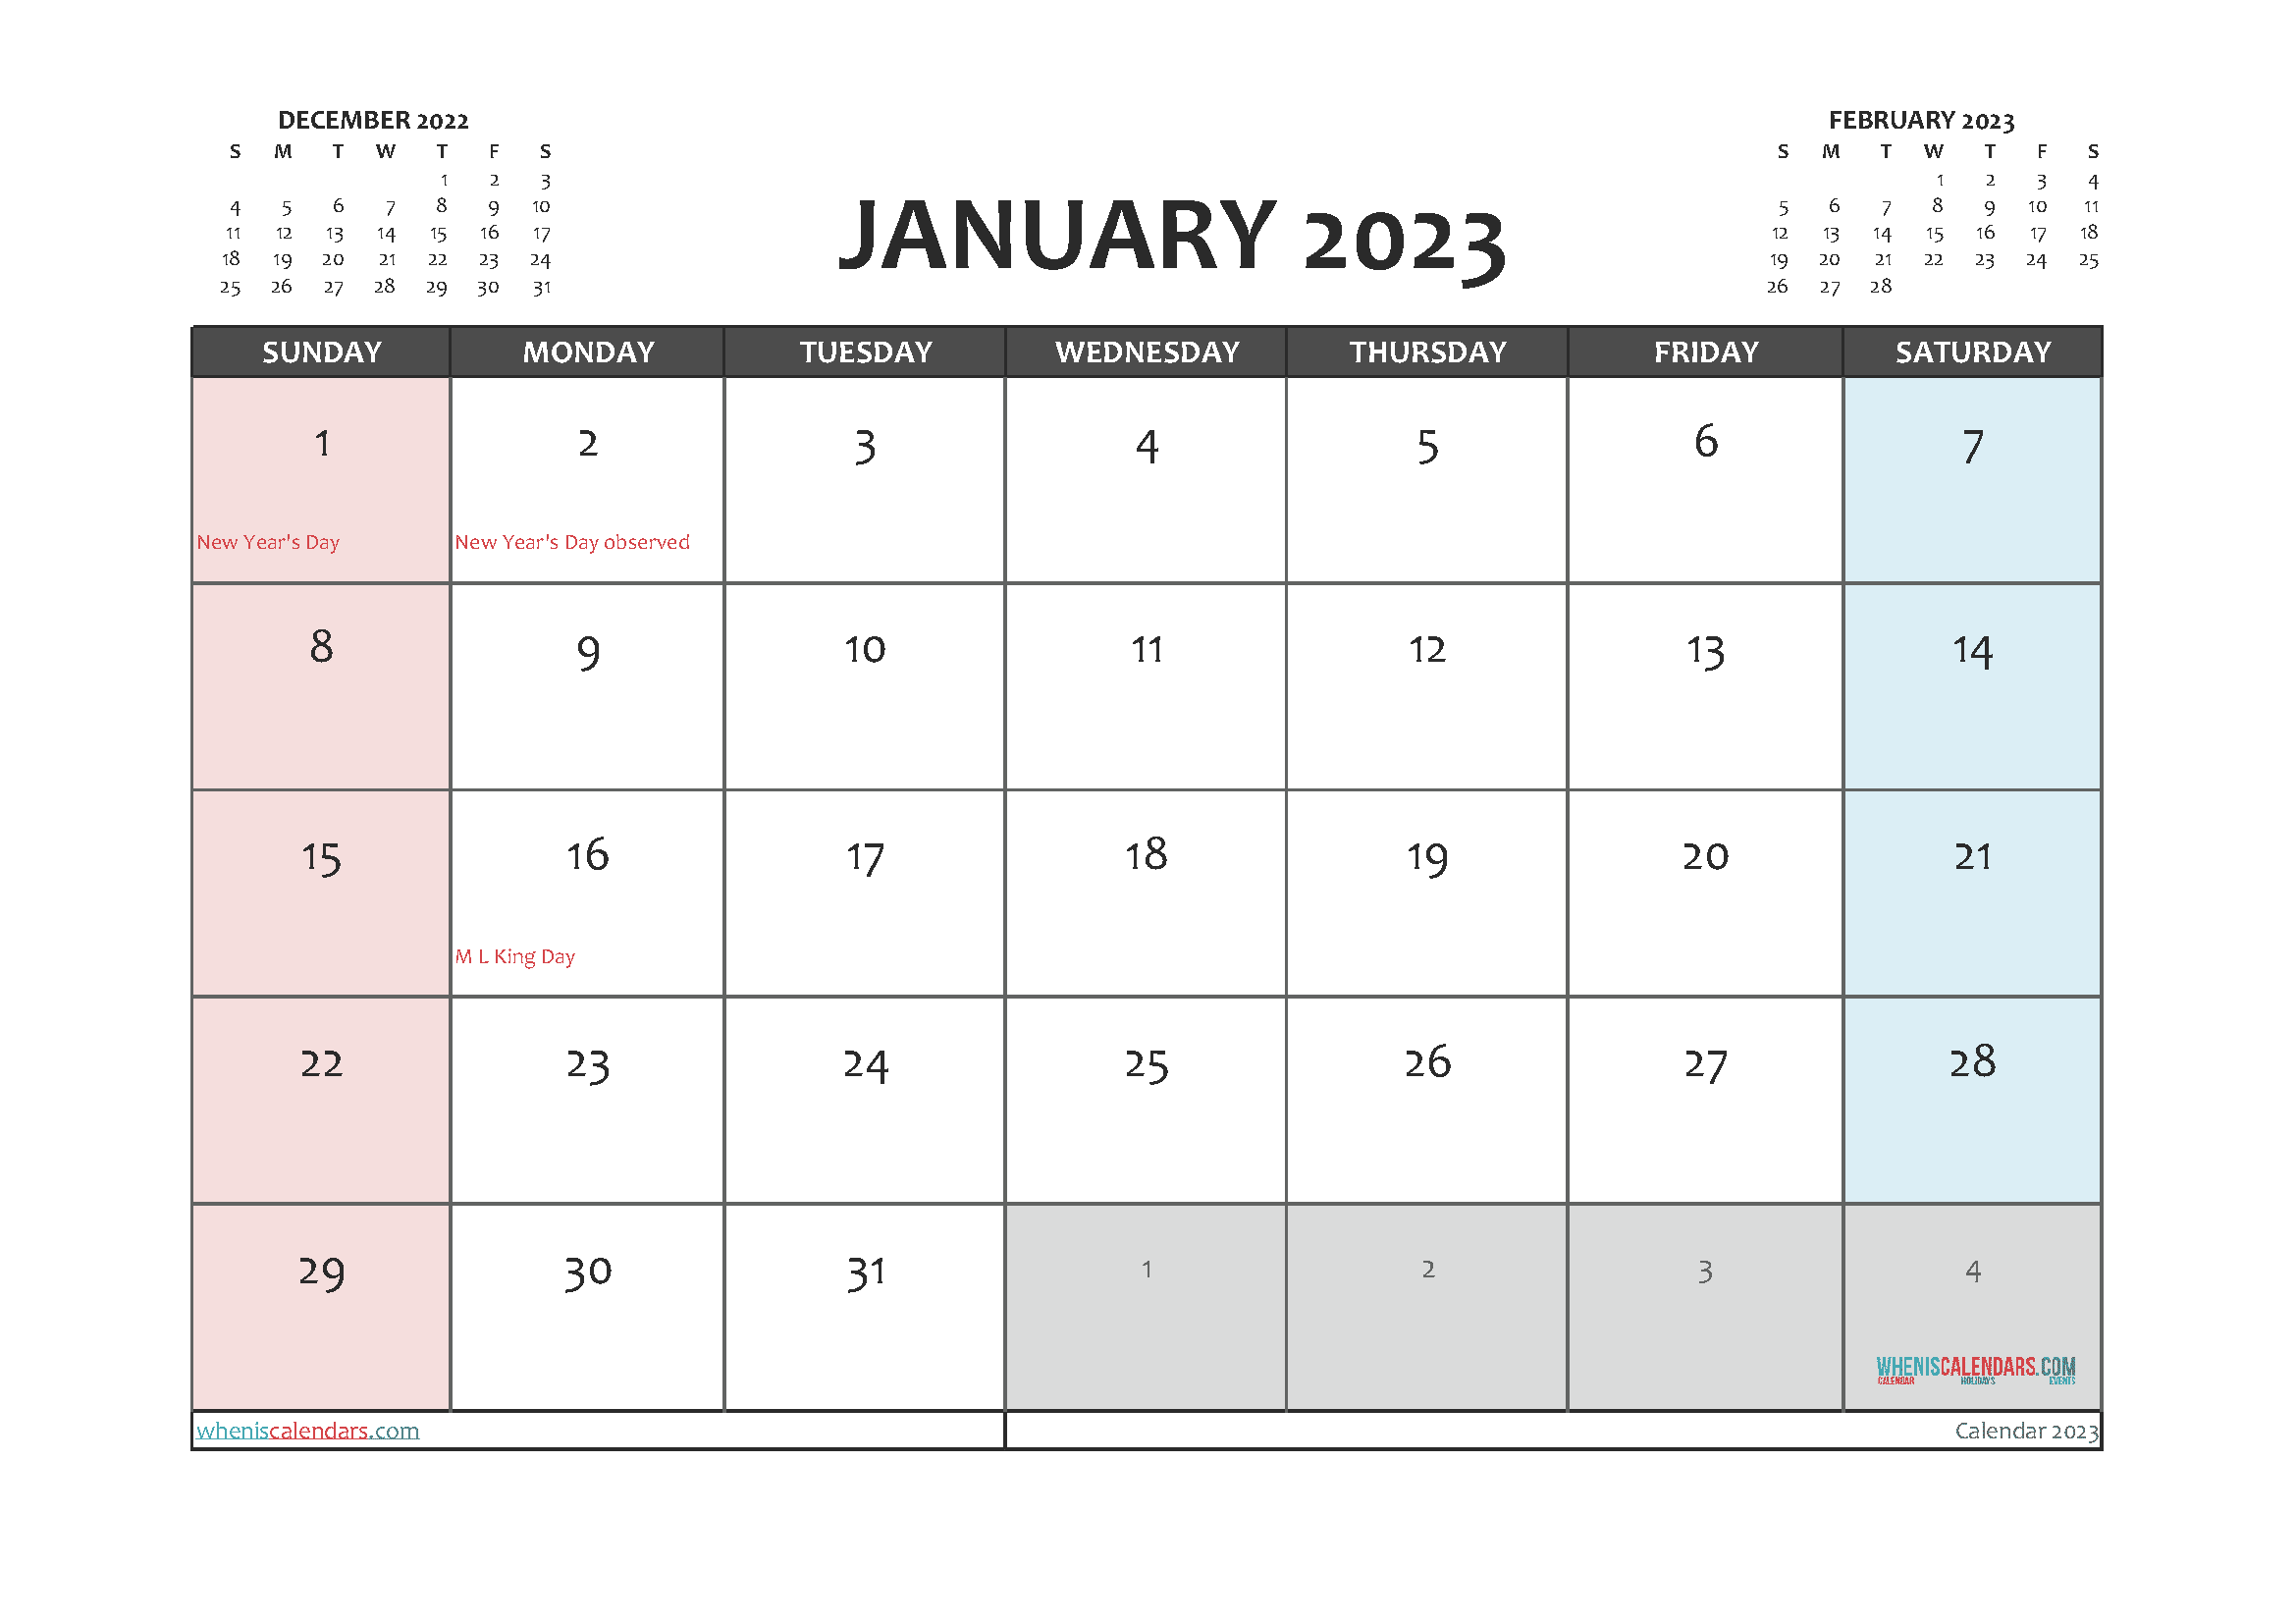 Free 2023 Calendar January Printable